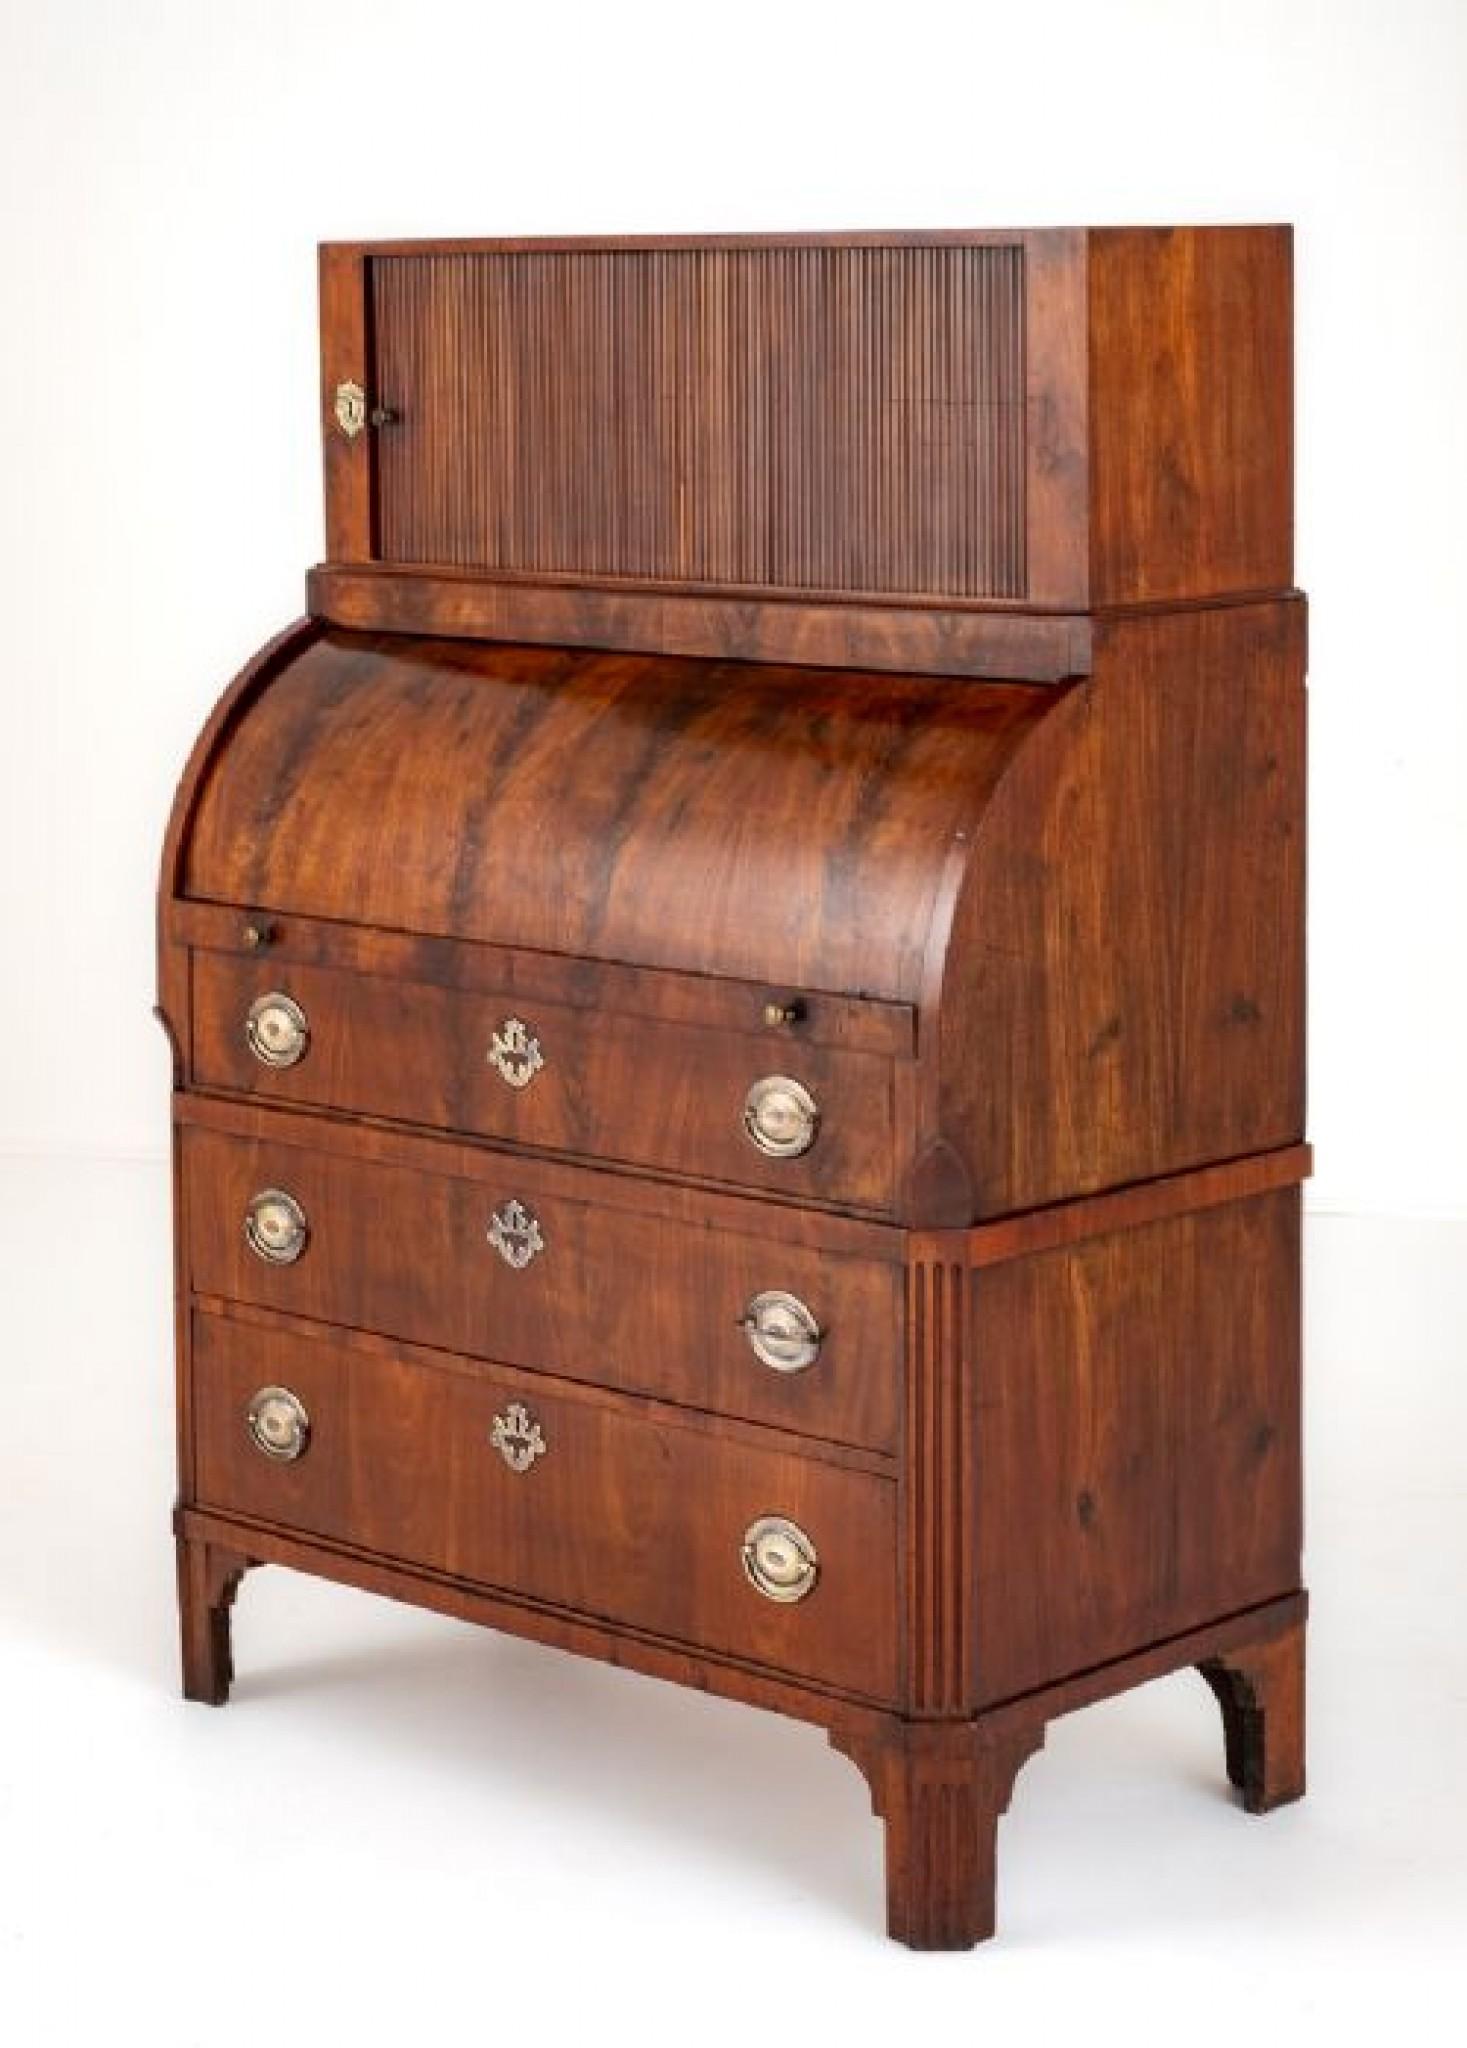 Regency Cylinder Desk Mahogany Furniture, 19th Century For Sale 3